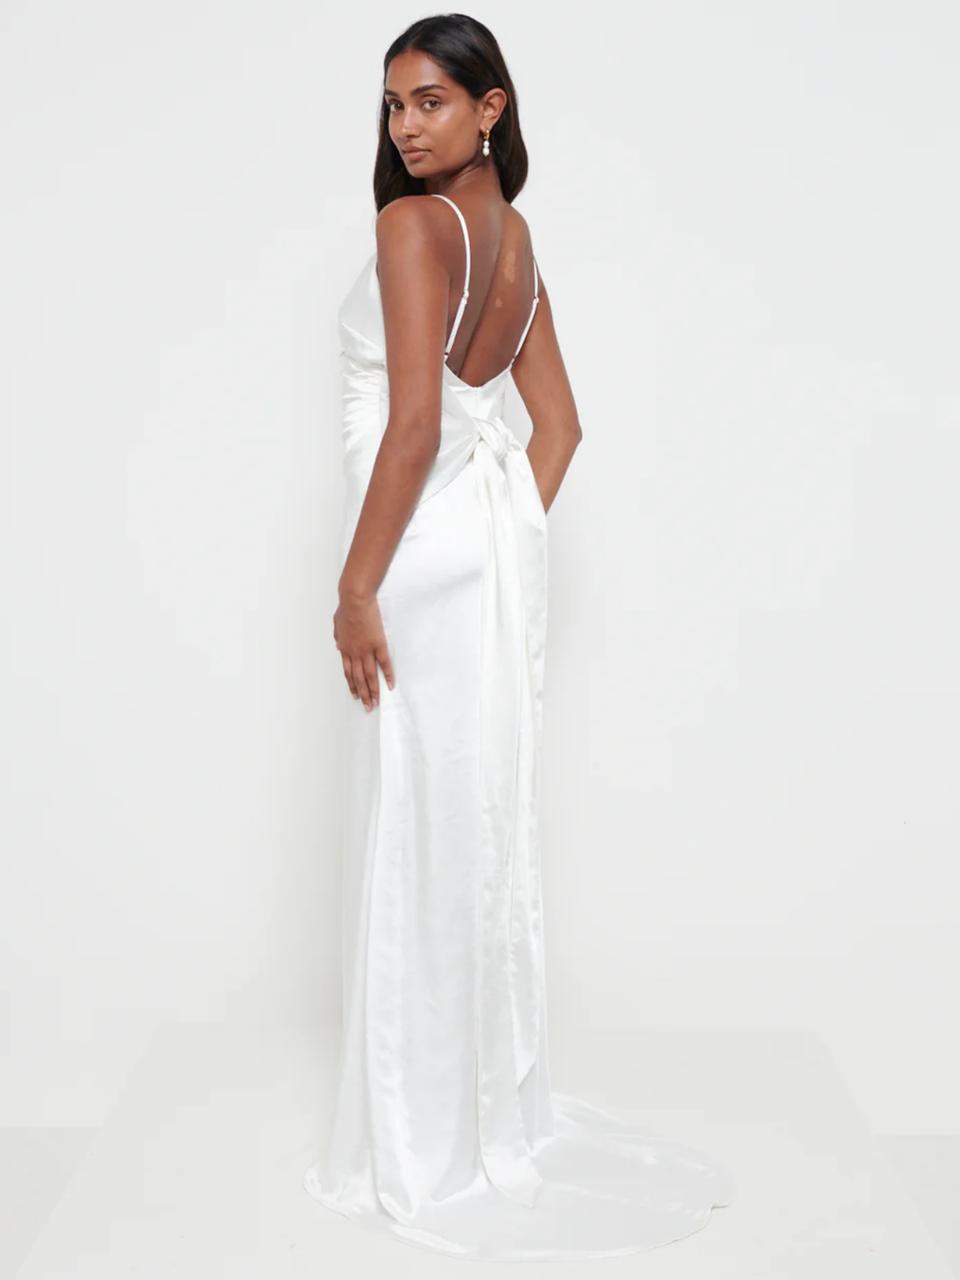 Cheap Wedding Dresses: 45 Affordable High Street Wedding Dresses ...